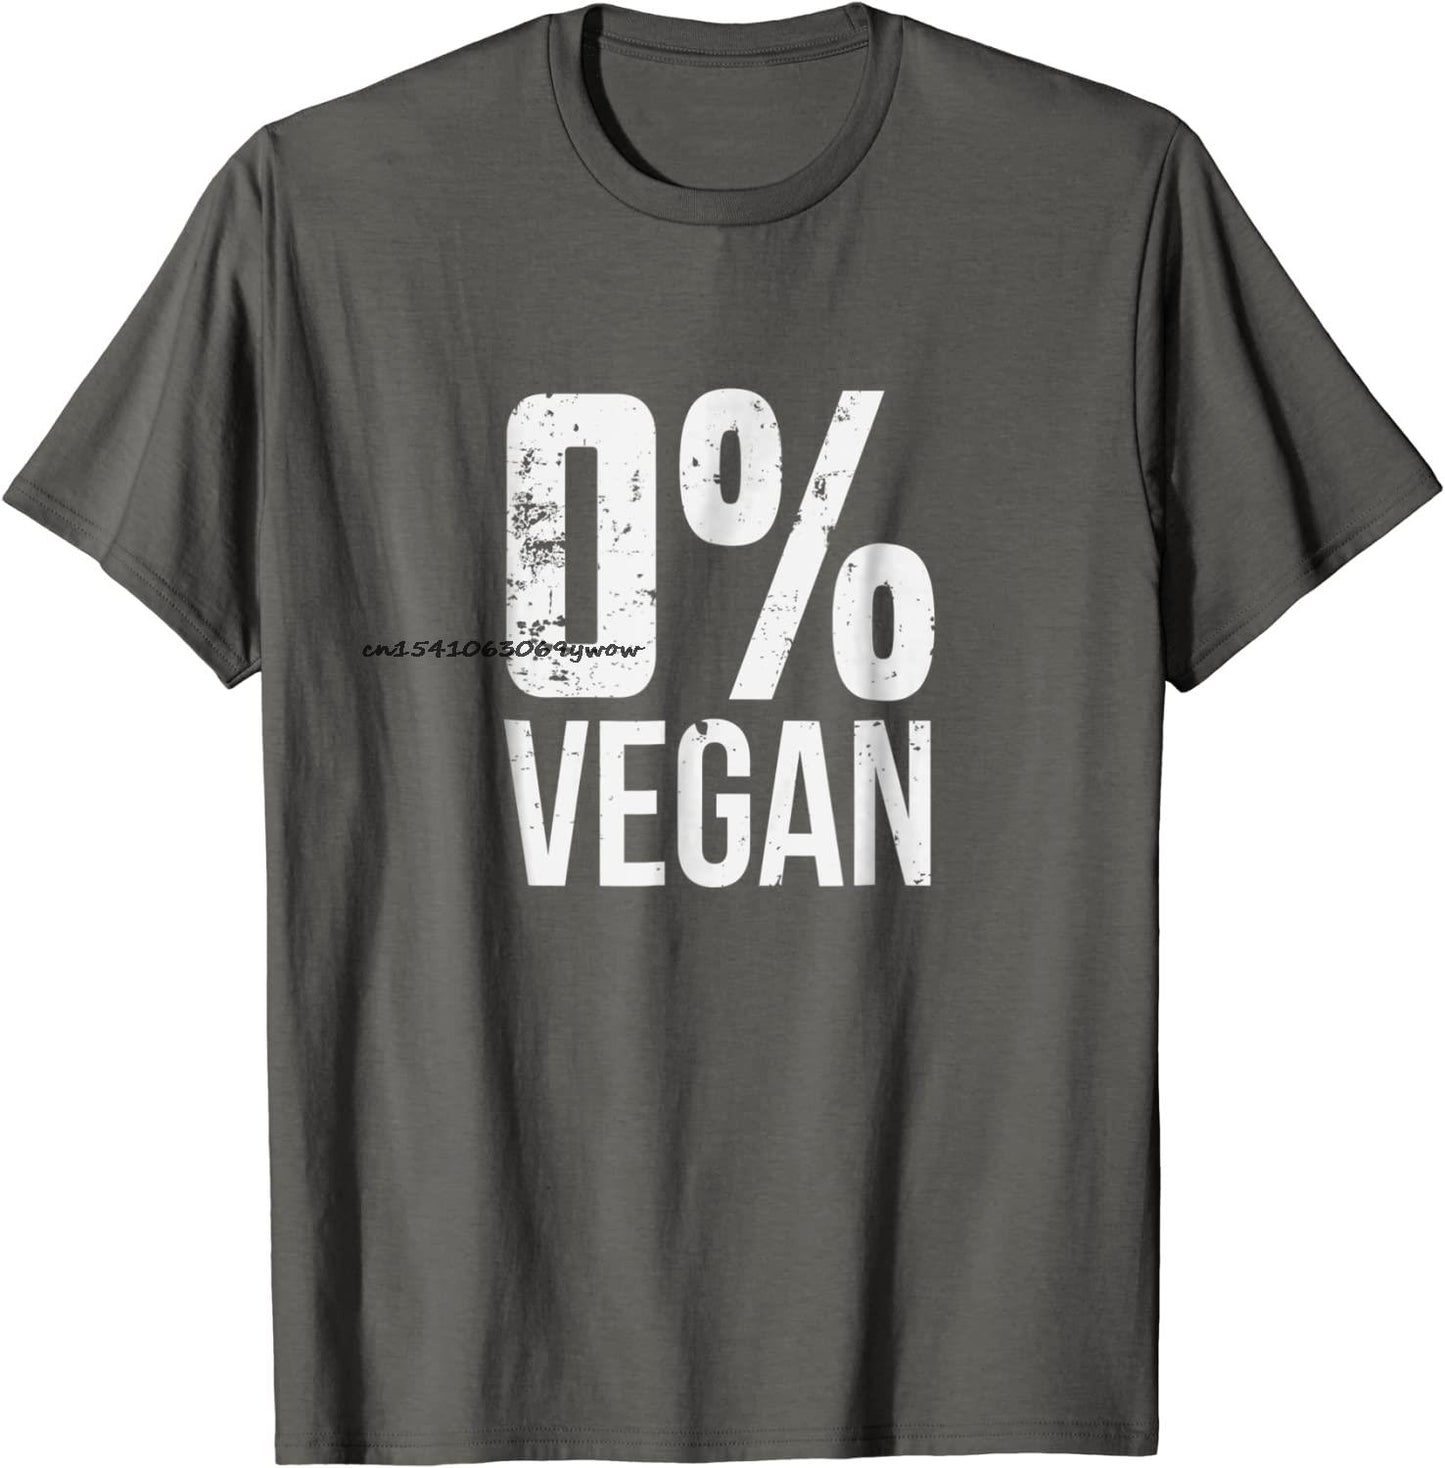 Zero Percent Vegan Funny BBQ Carnivore Meat Eater T-Shirt Top T-shirts for Men